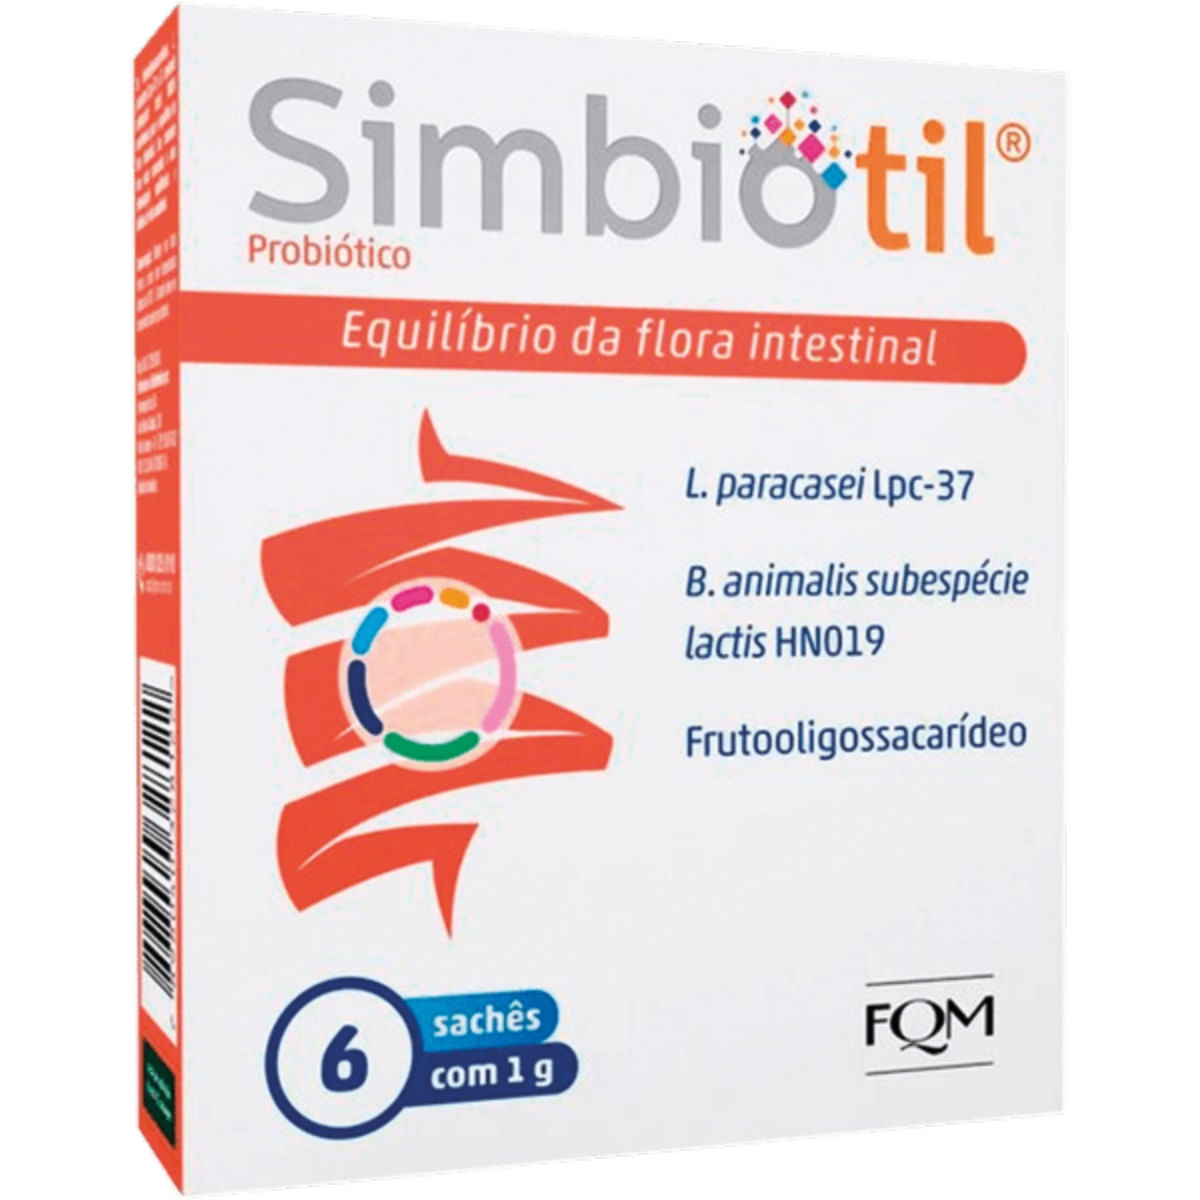 simbiotil-probiotico-6-saches-de-1-gr-1.jpg